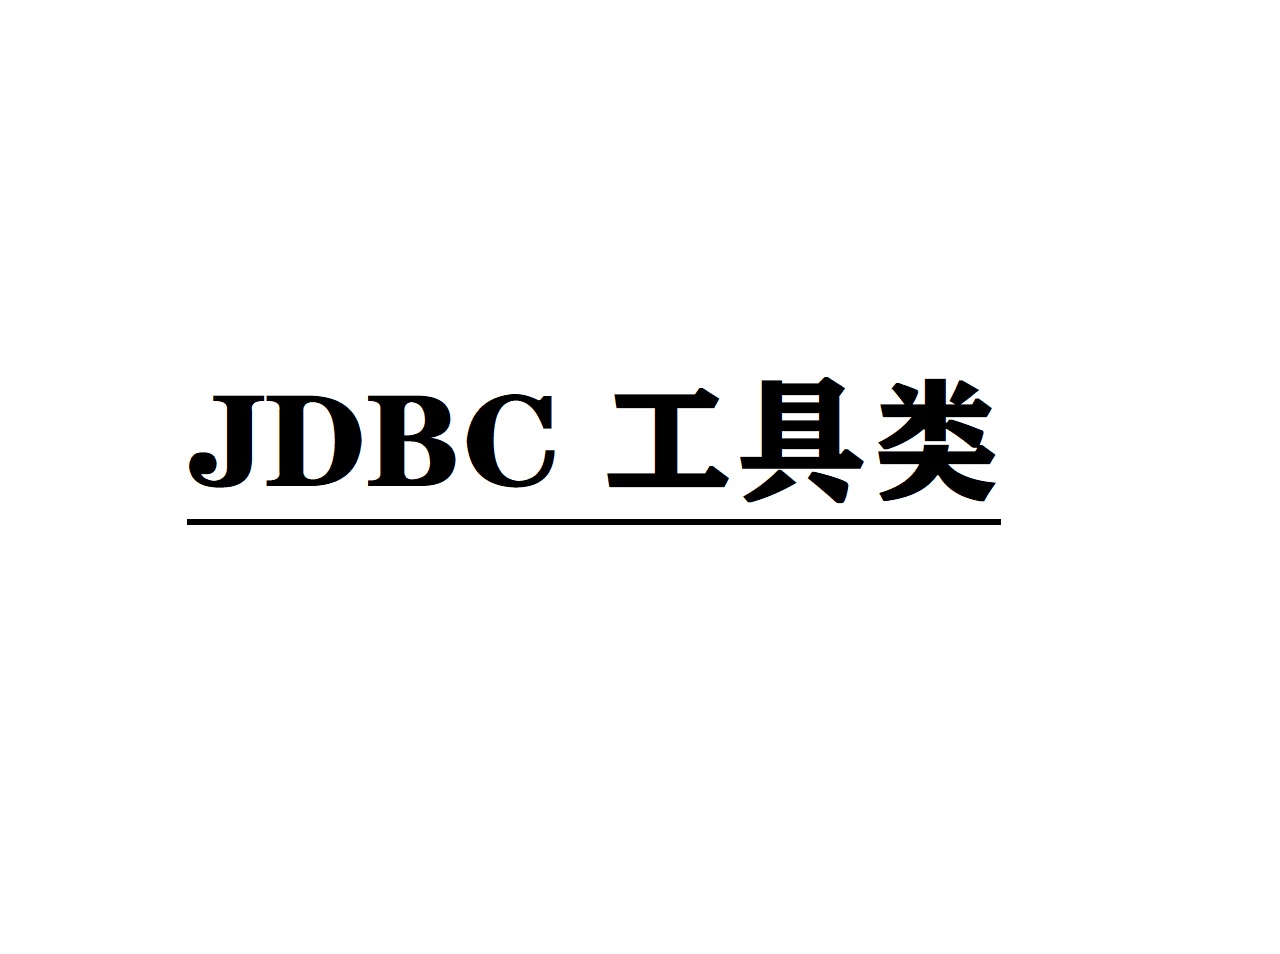 JDBC工具类